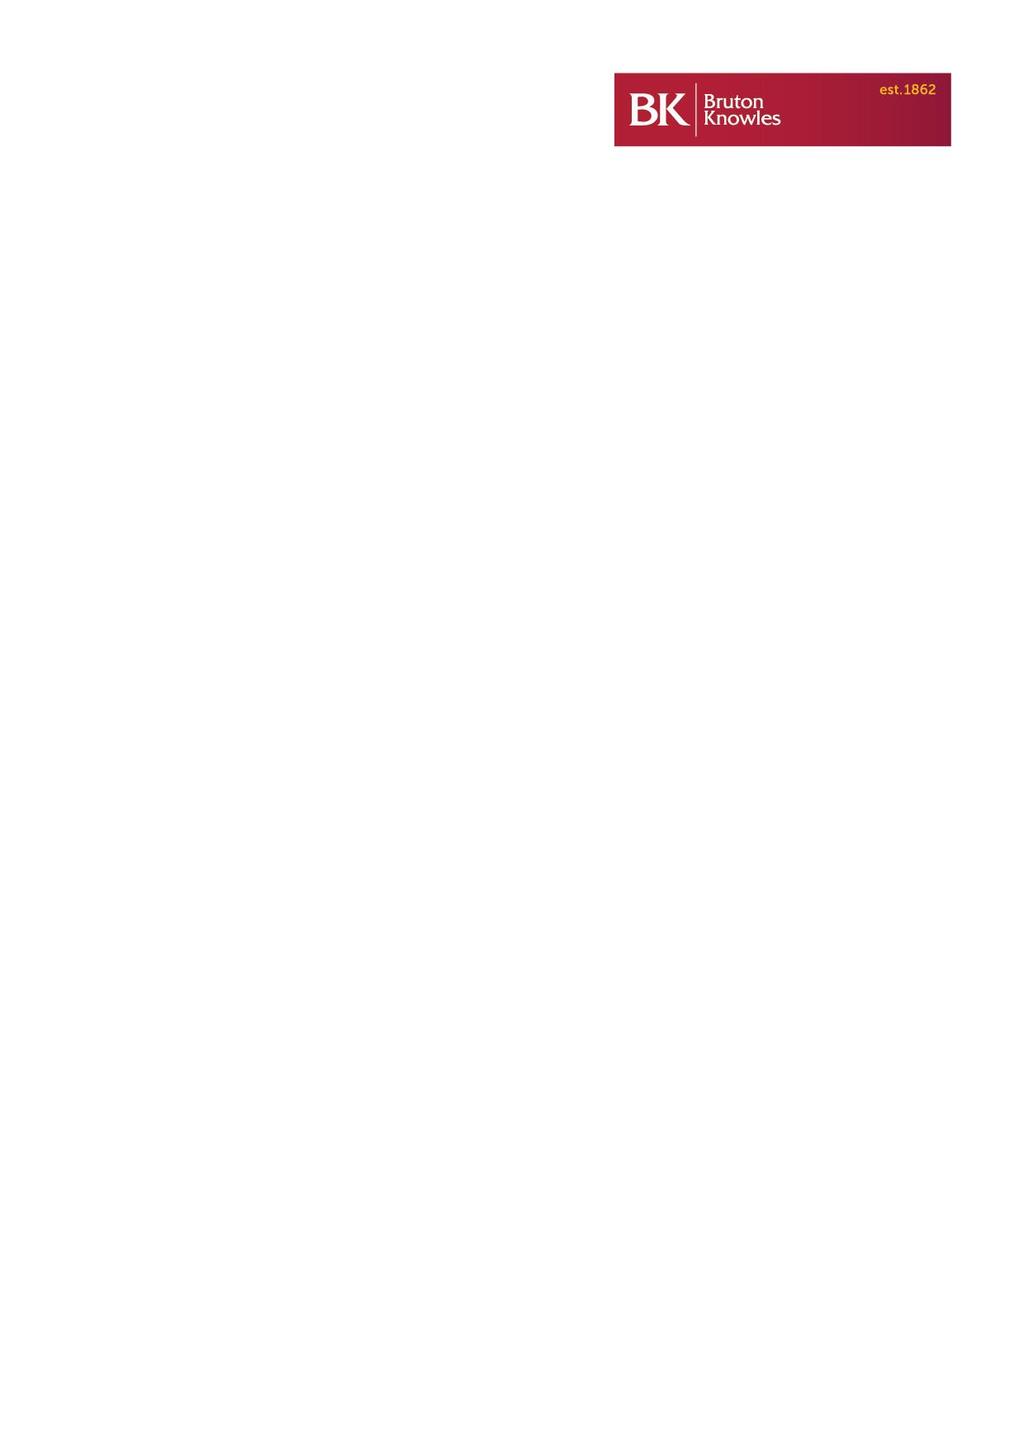 FORM OF INFORMAL TENDER Properties at Harperley Hall, Fir Tree, Bishop Auckland, DL15 8DS Informal Tenders Closing Date: Noon on Tuesday 19 th December 2017 Lot 1 4, Harperley Grove Lot 2 5,